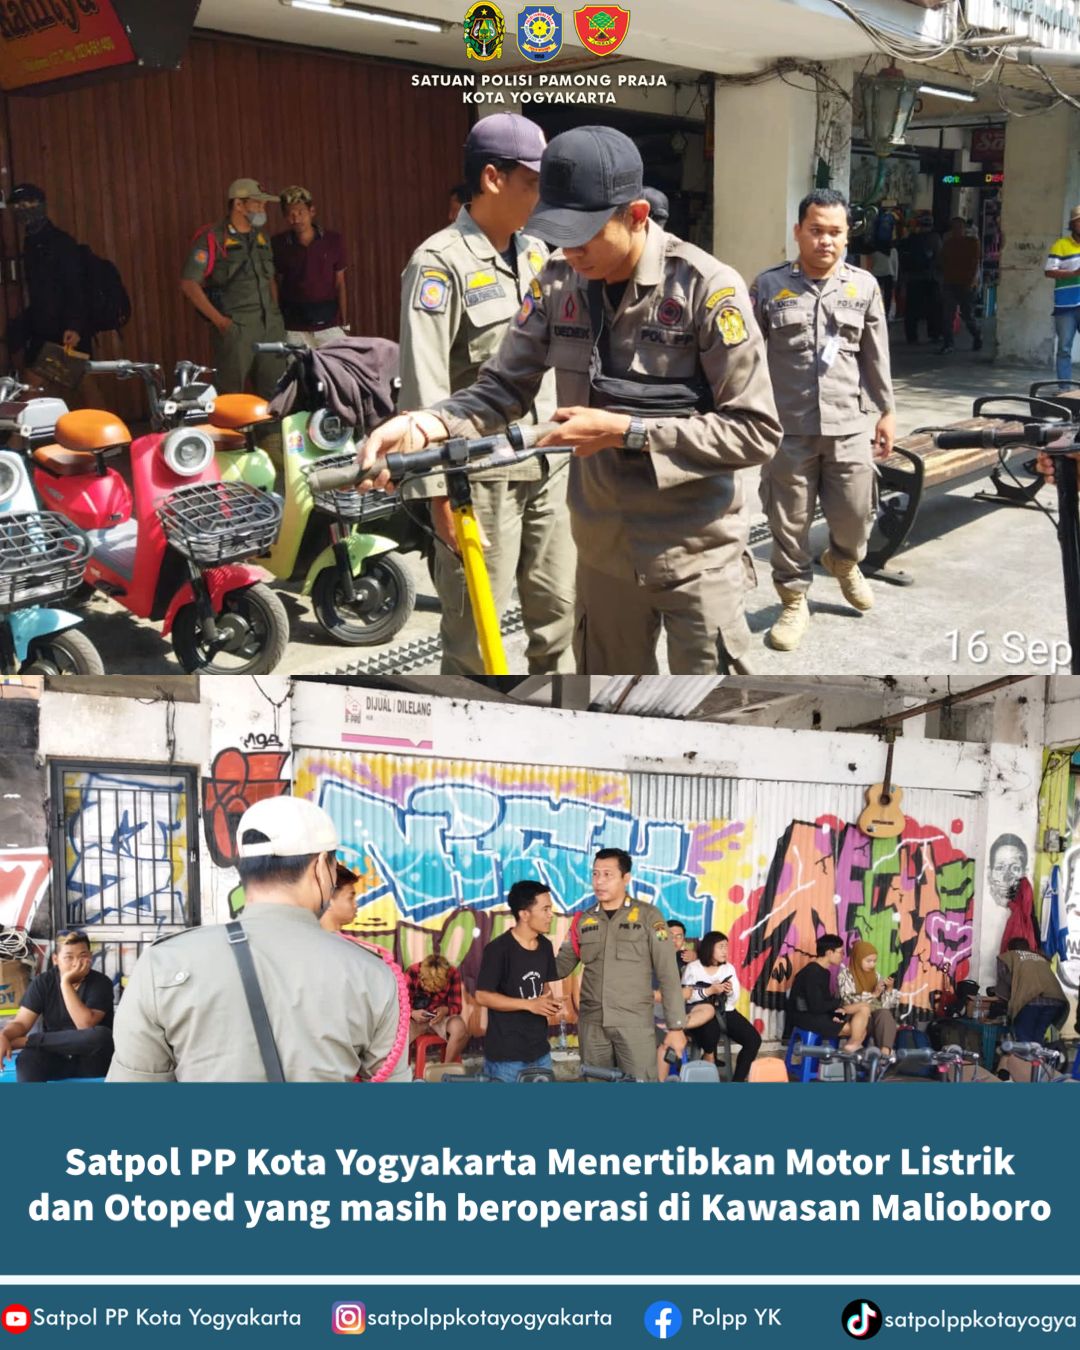 Satpol PP Kota Yogyakarta Menertibkan Motor Listrik dan Otoped yang masih beroperasi di Kawasan Malioboro.